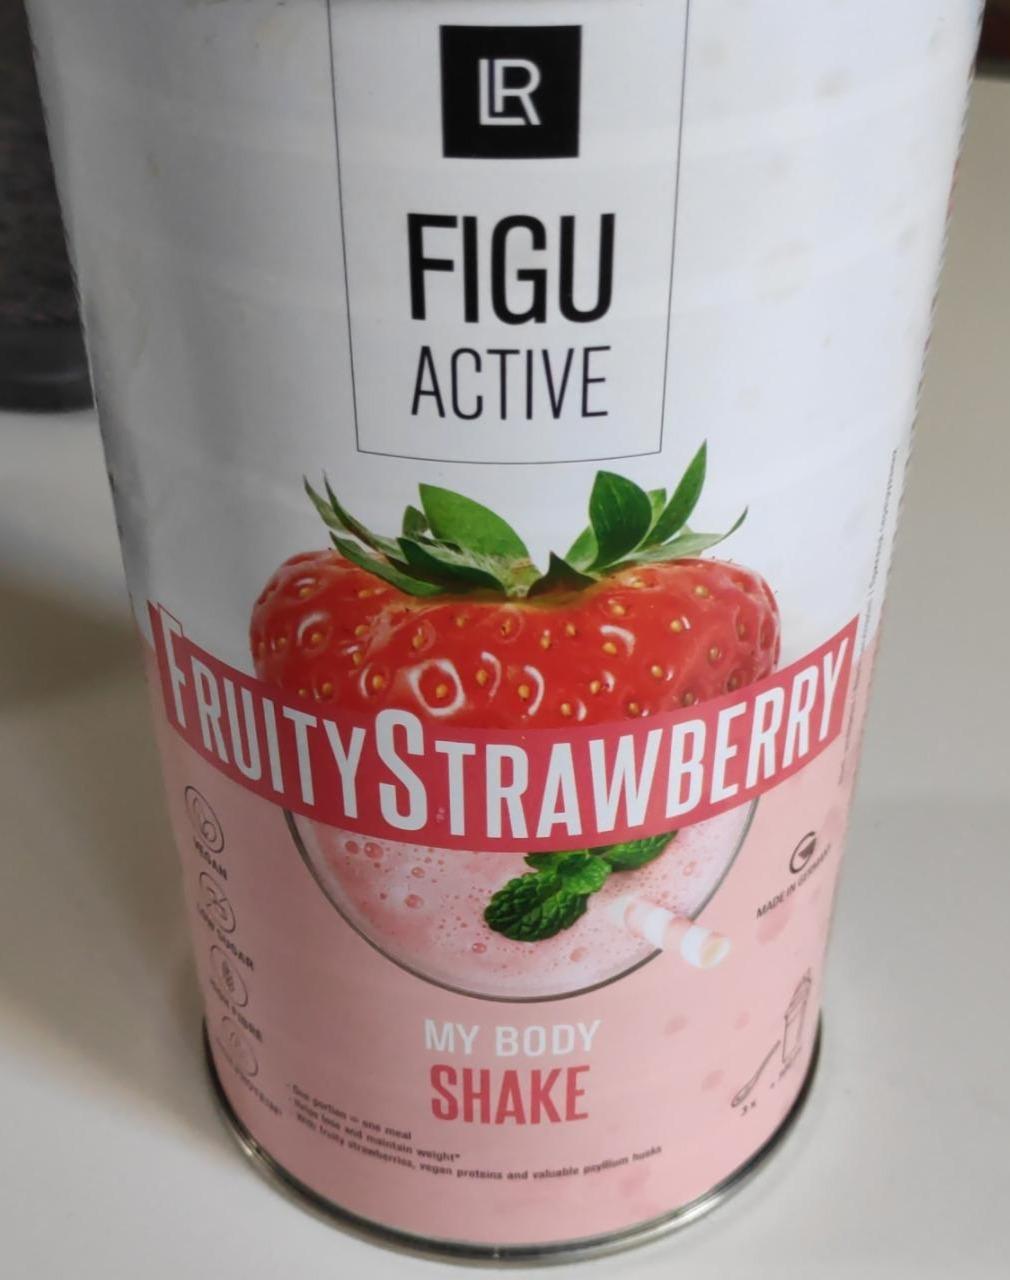 Fotografie - Figu Active My Body shake Fruity Strawberry LR